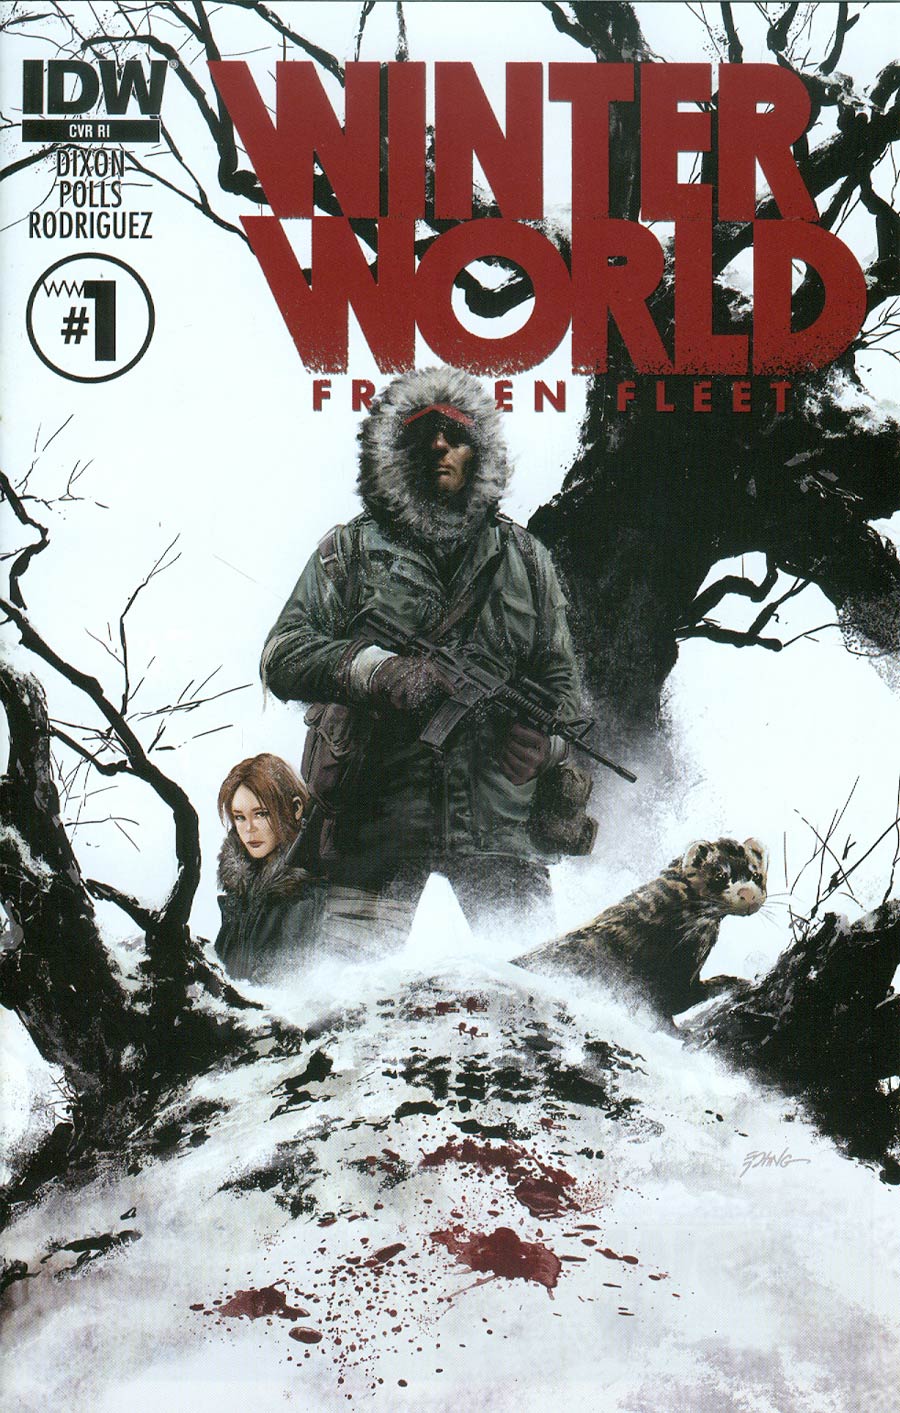 Winterworld Frozen Fleet #1 Cover C Incentive Steve Epting Variant Cover